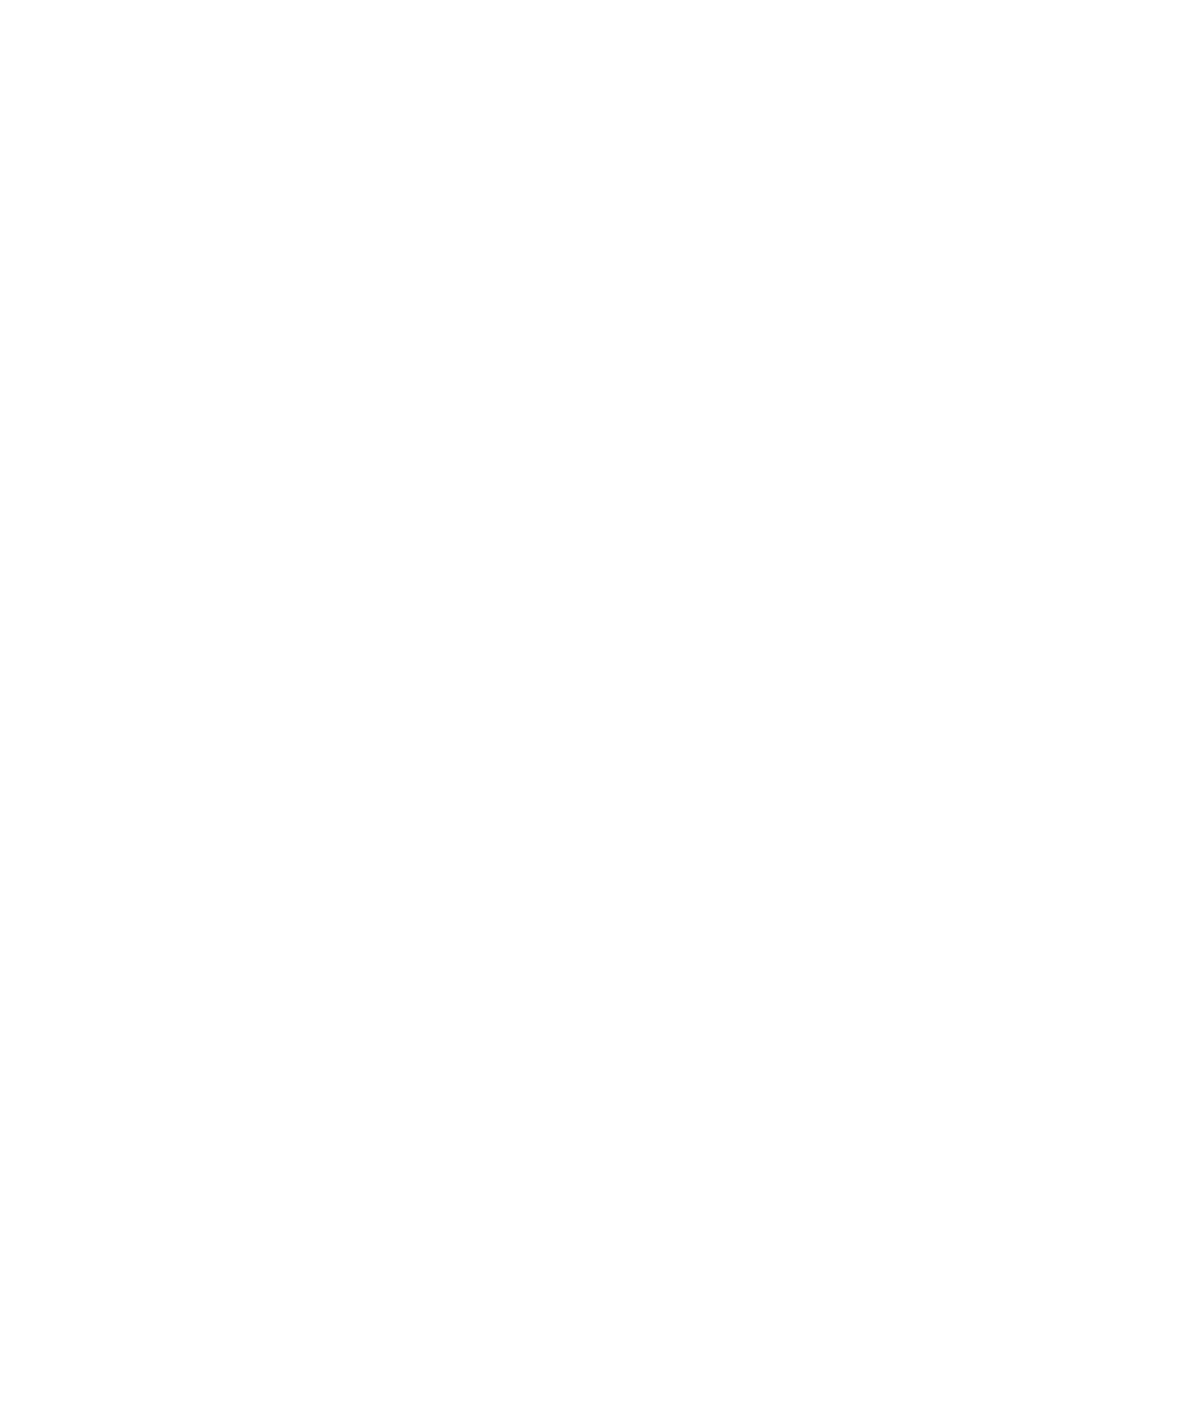 Goal7